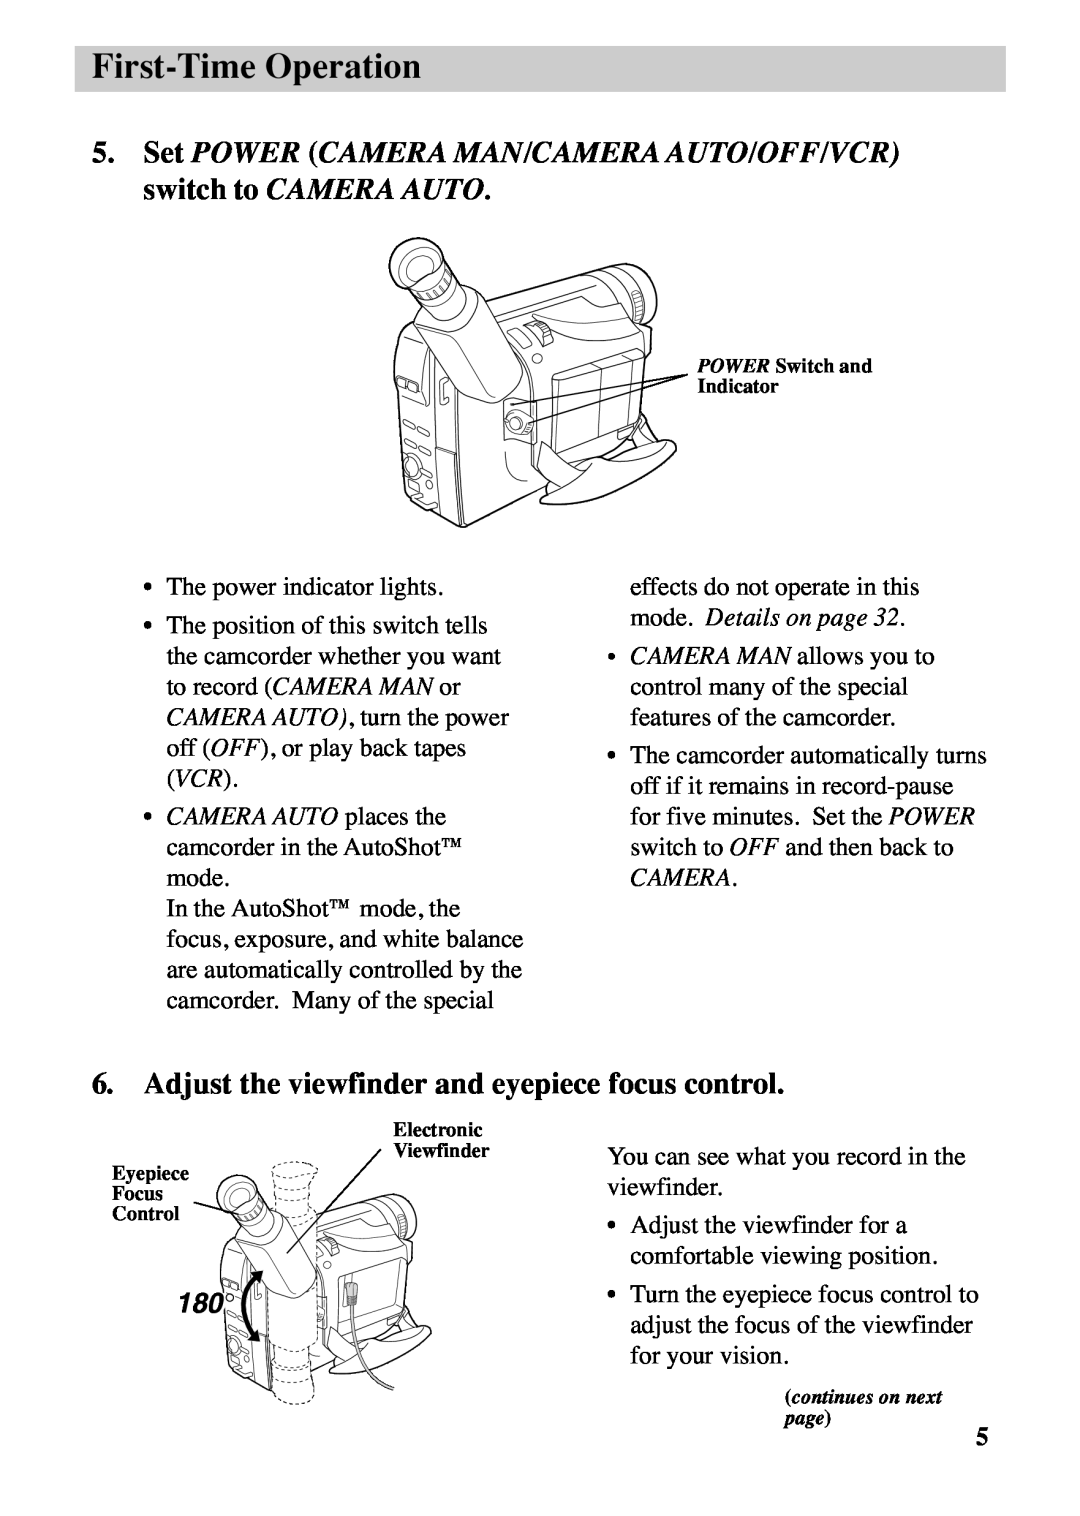 RCA CC6263 manual Set POWER CAMERA MAN/CAMERA AUTO/OFF/VCR switch to CAMERA AUTO, Camera, First-Time Operation 